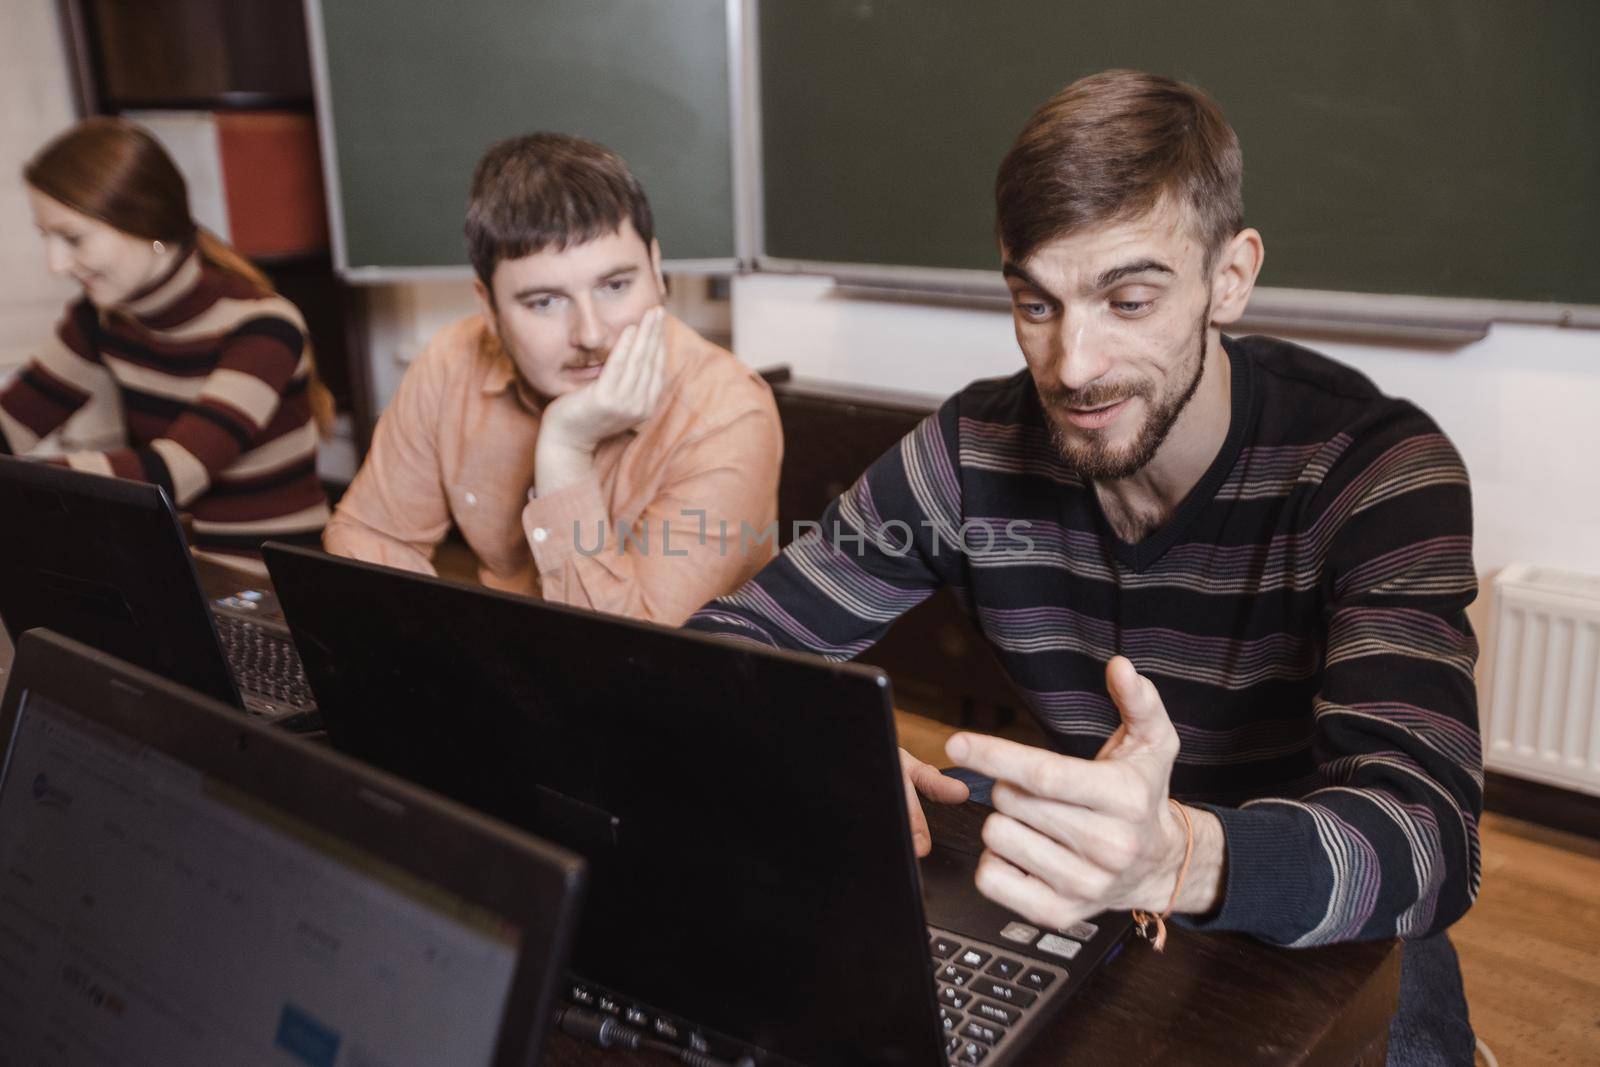 People in classroom using laptops by Demkat